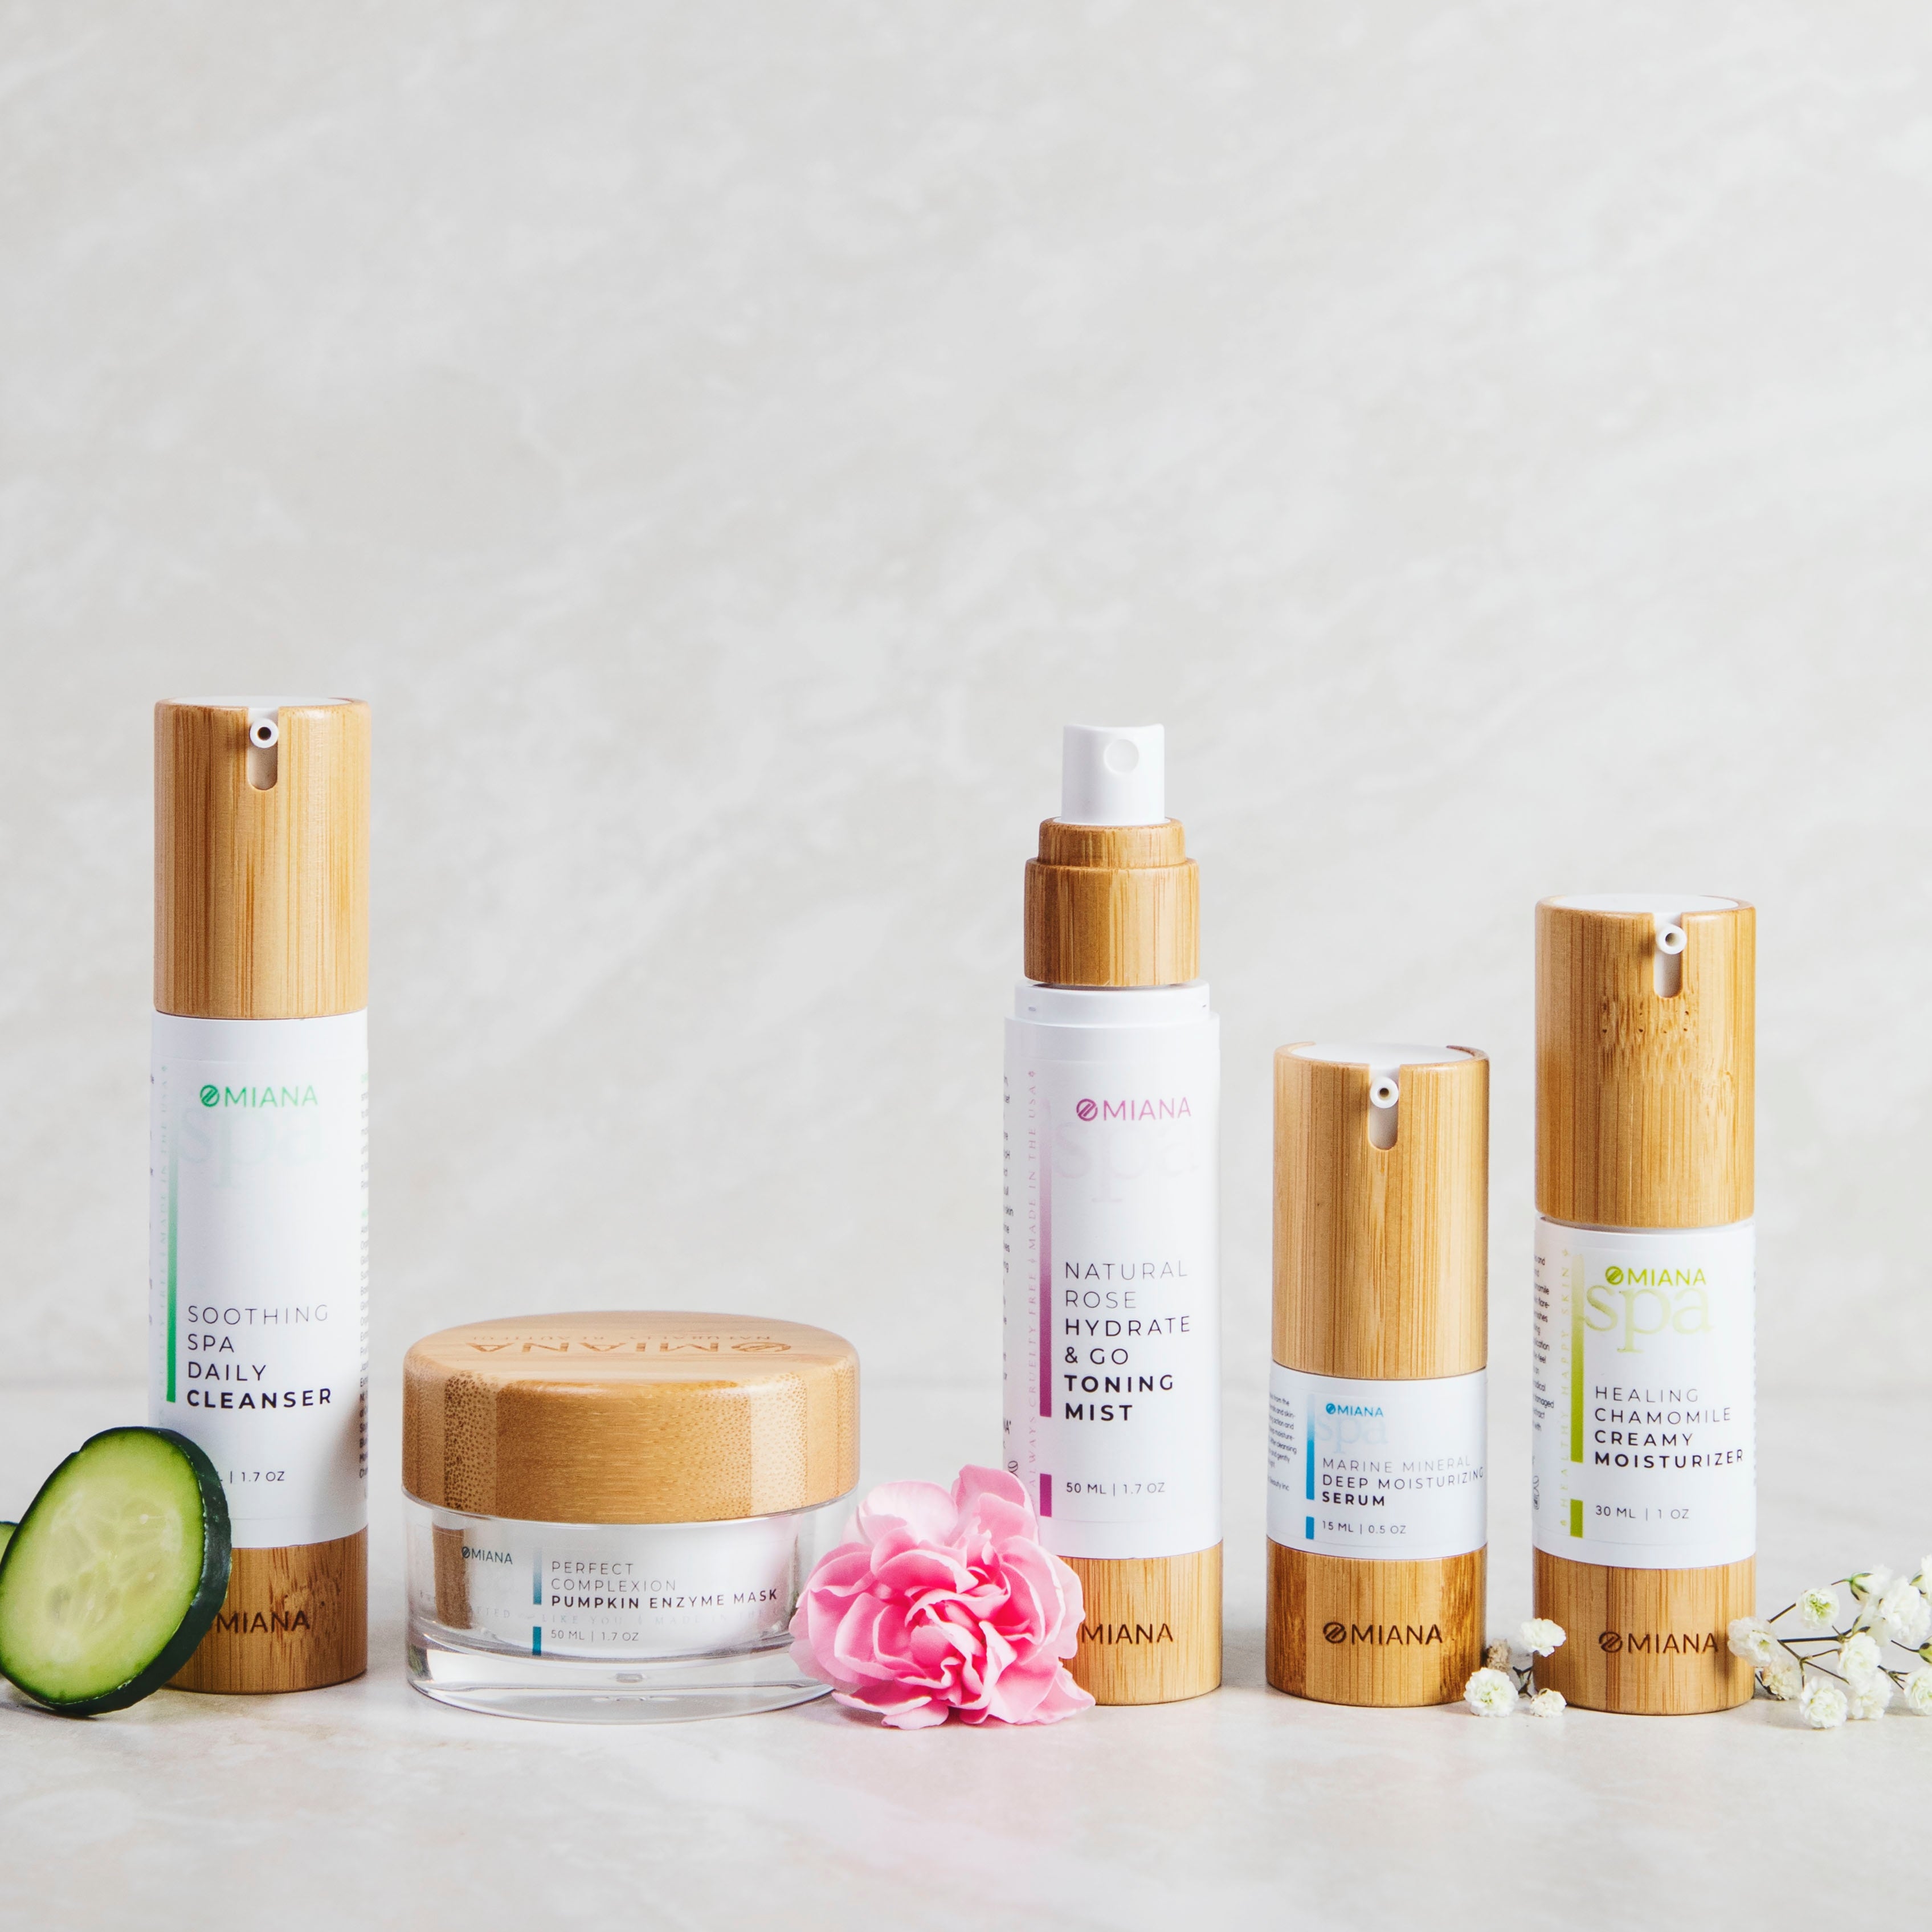 Omiana Natural Spa Skincare for Sensitive Skin Anti-Aging Spa Skincare Routine Complete Kit Bundle